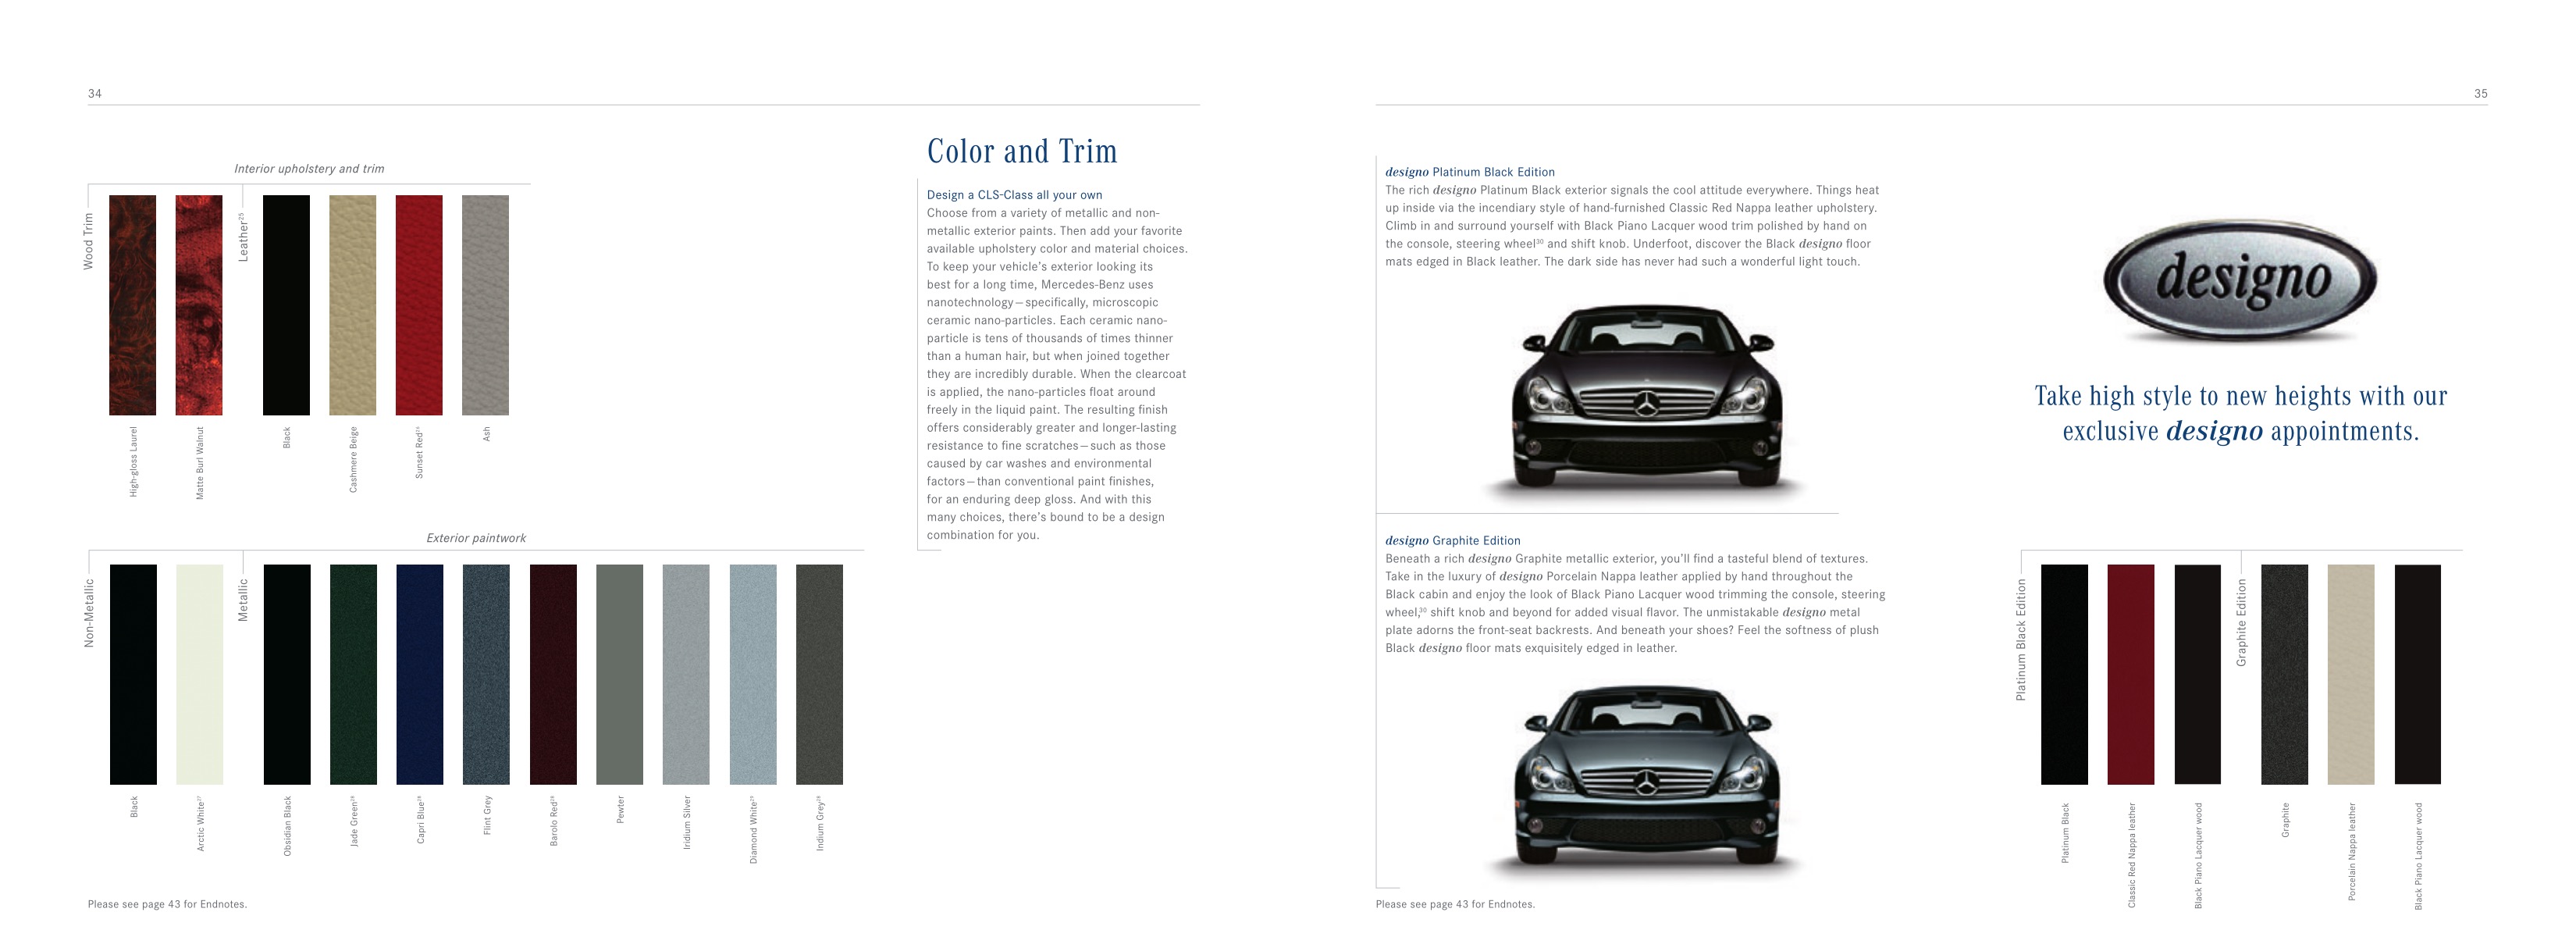 2008 Mercedes-Benz CLS-Class Brochure Page 13